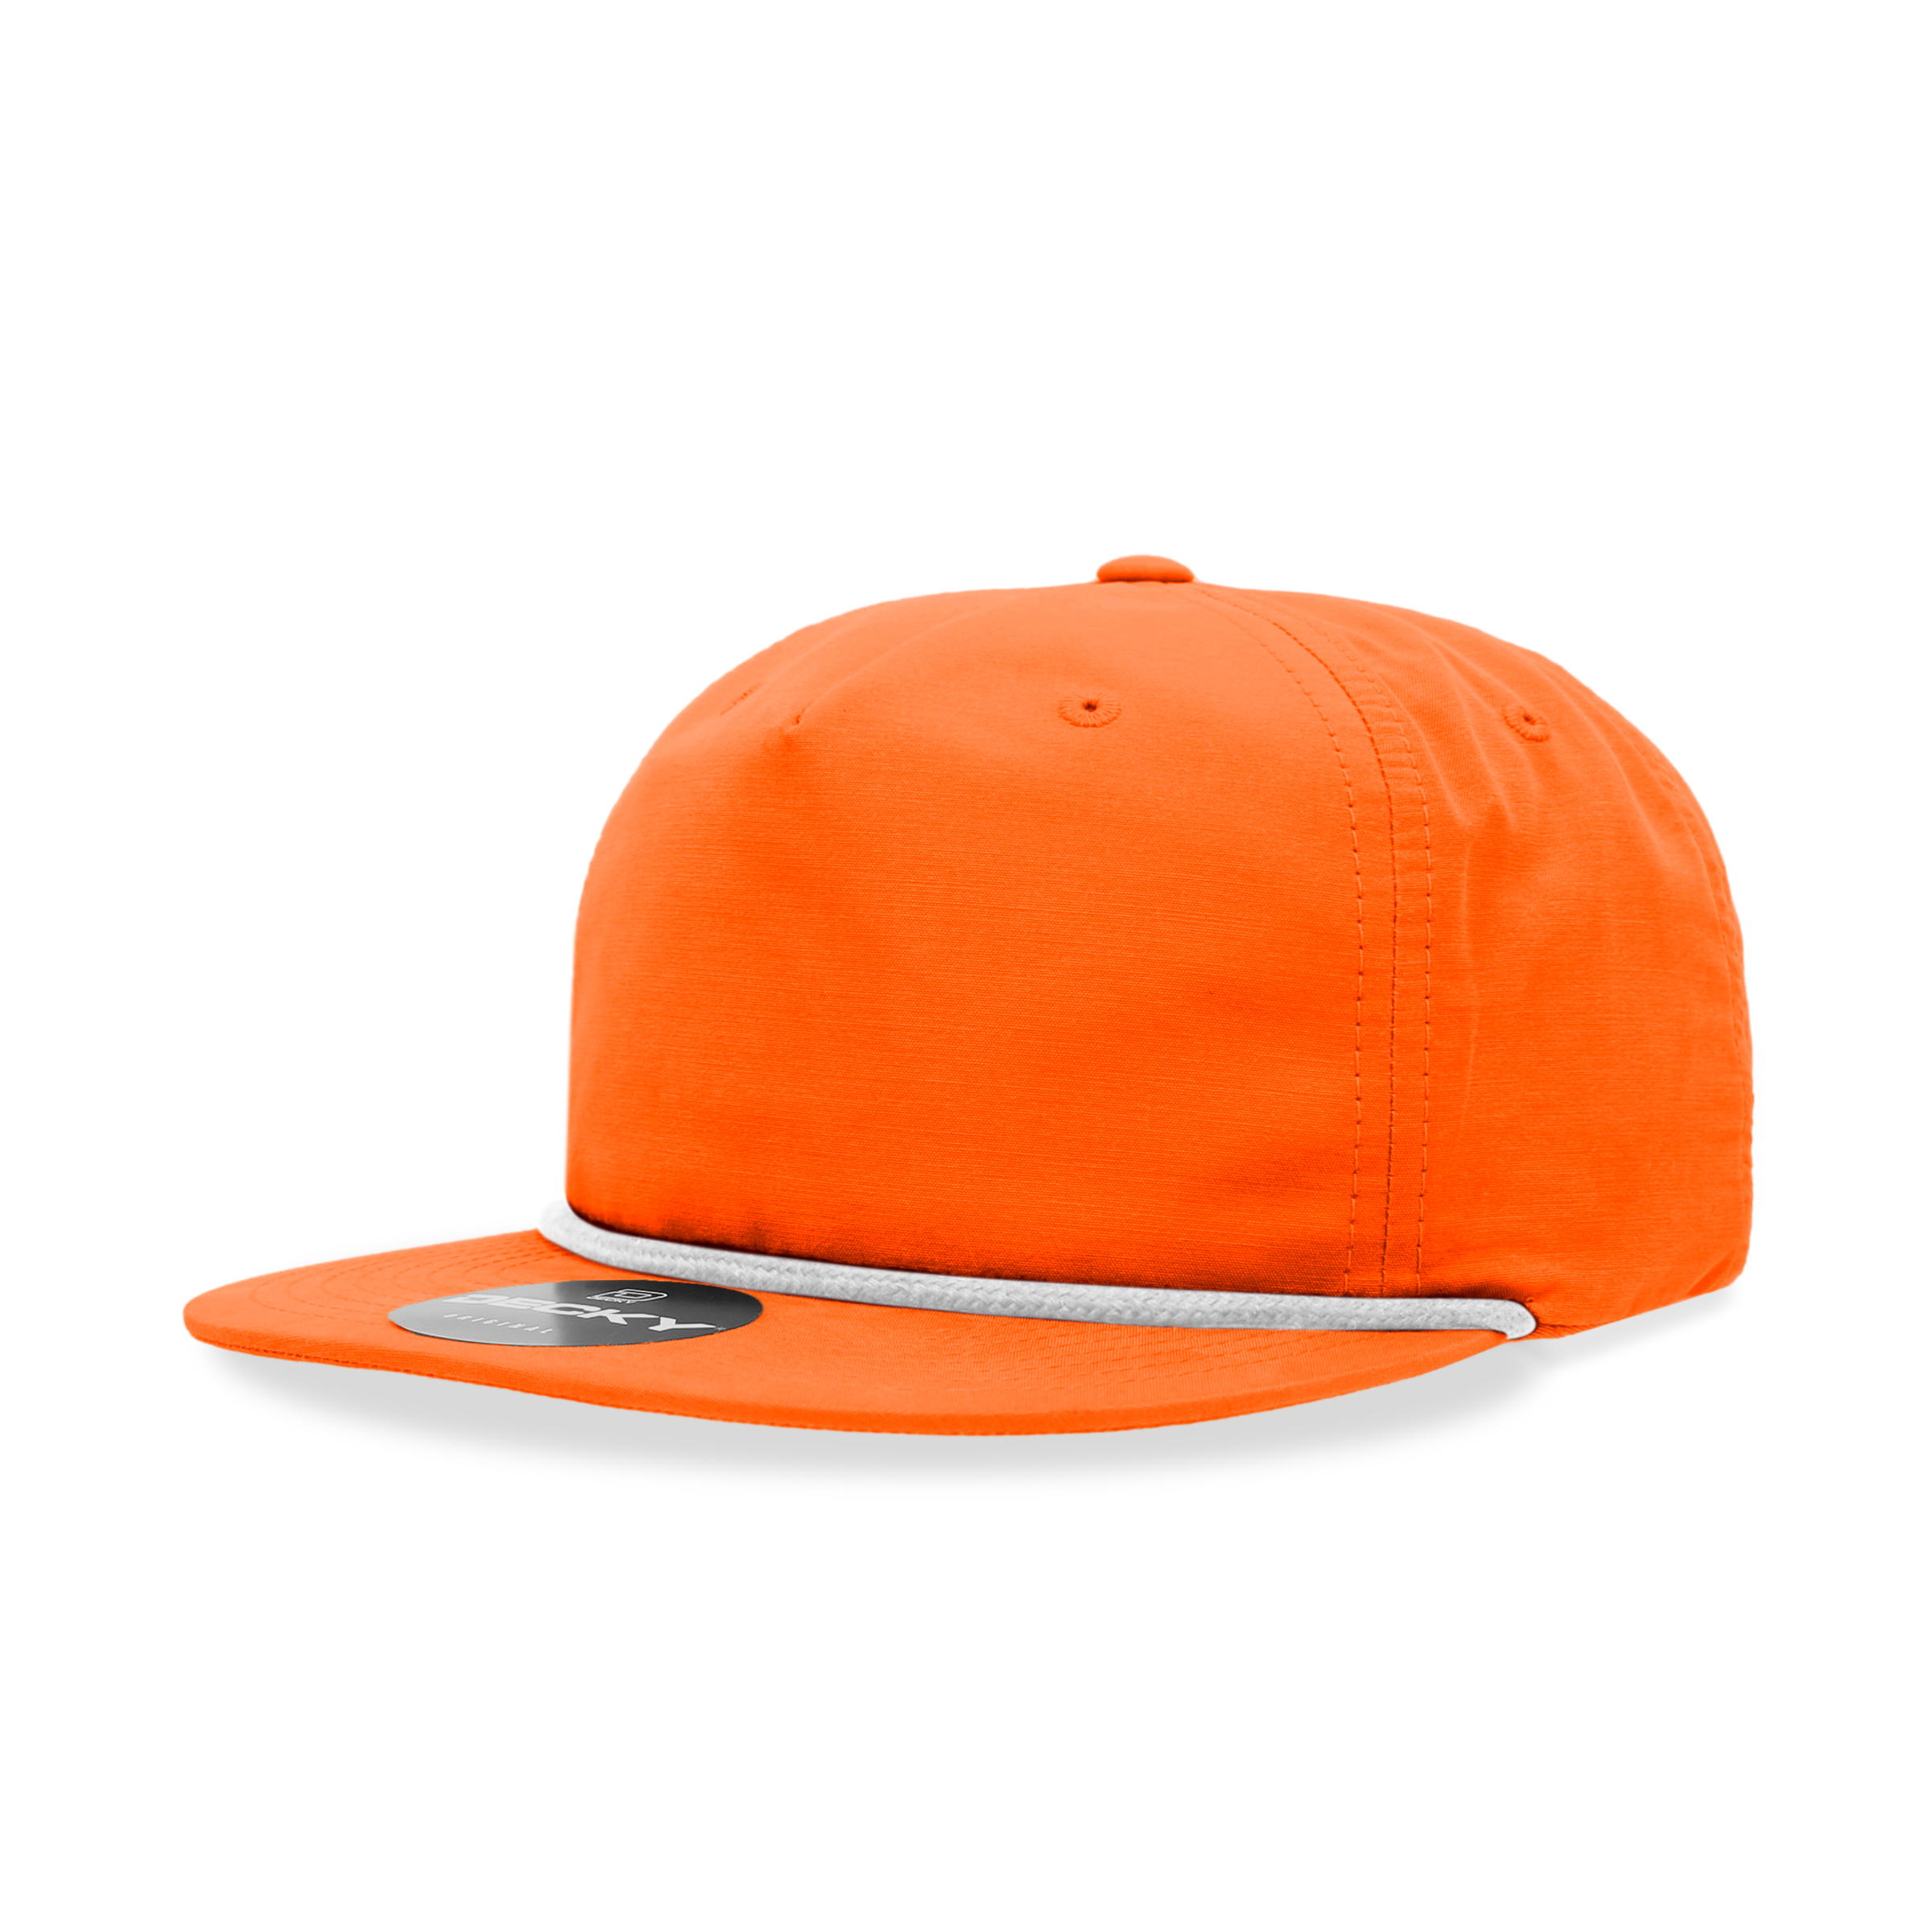 Orange/White color variant